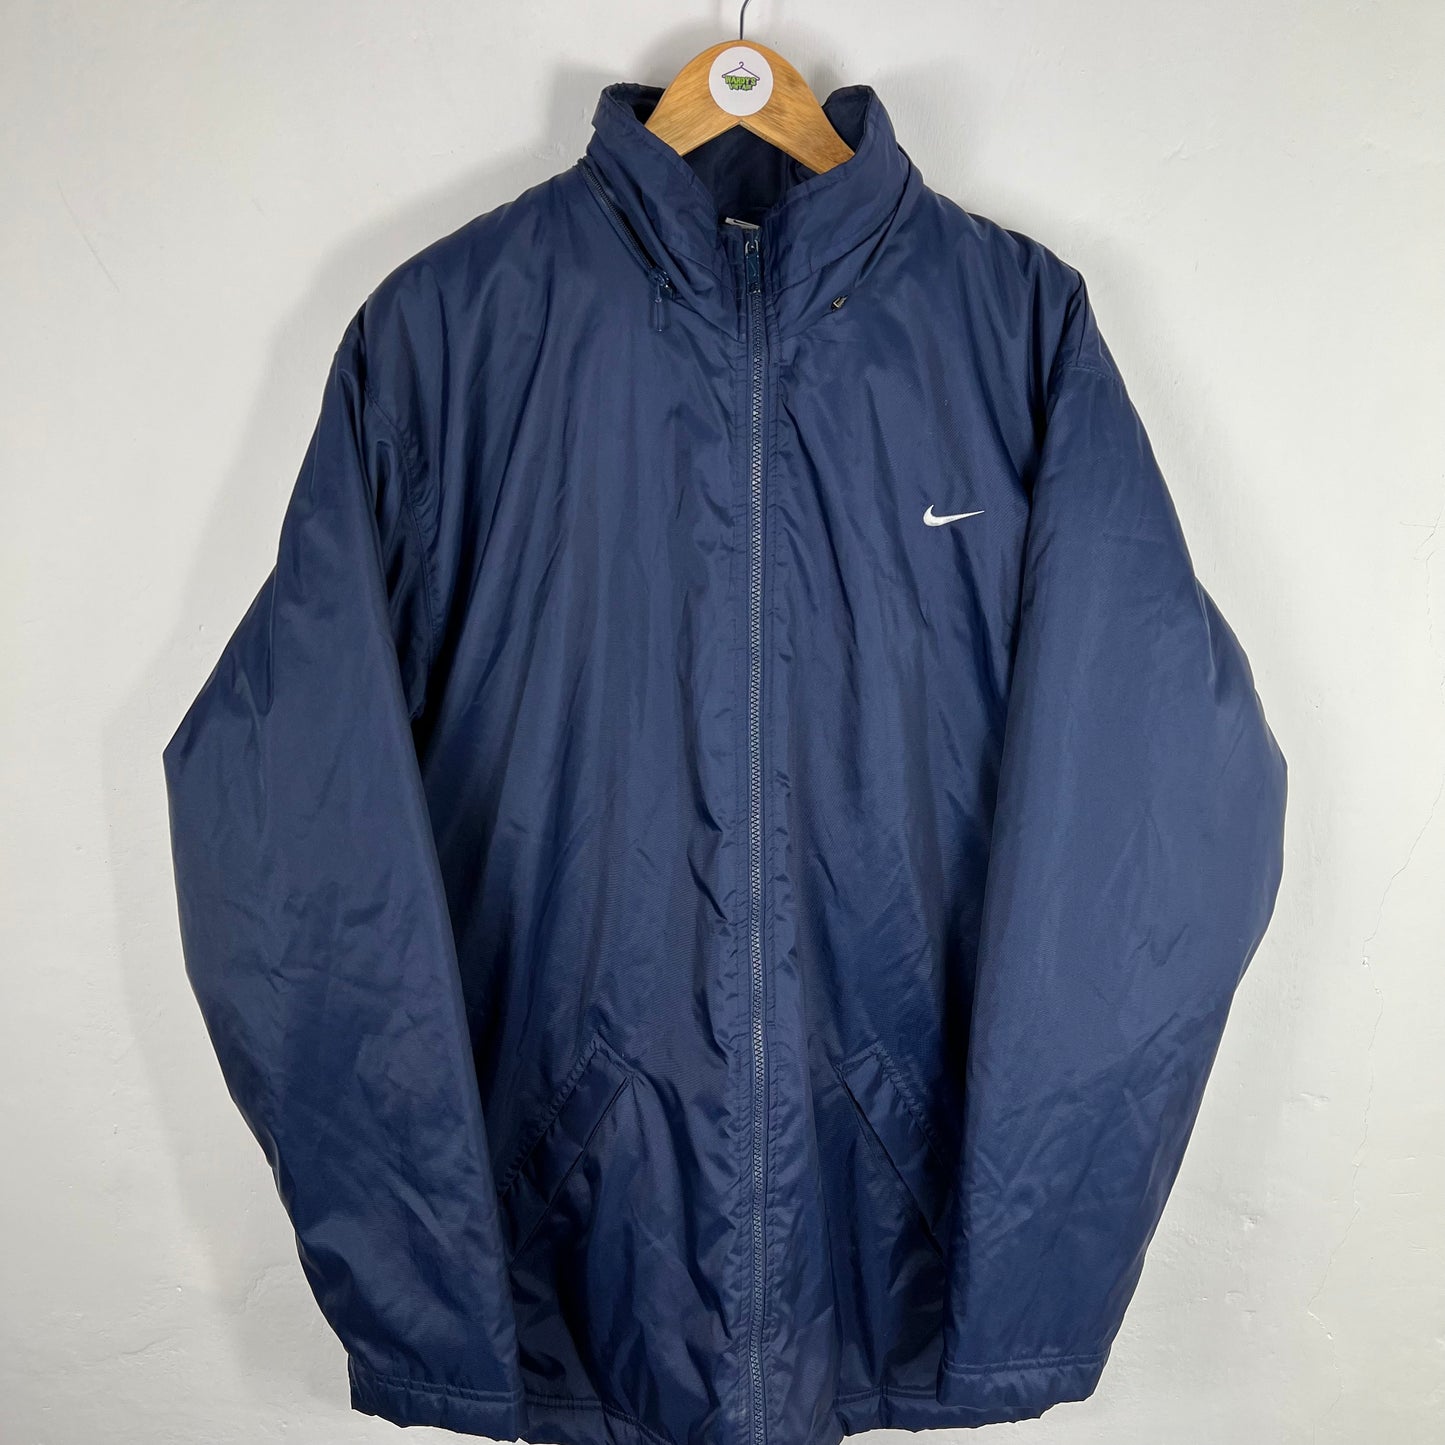 00s Nike winter jacket navy XL